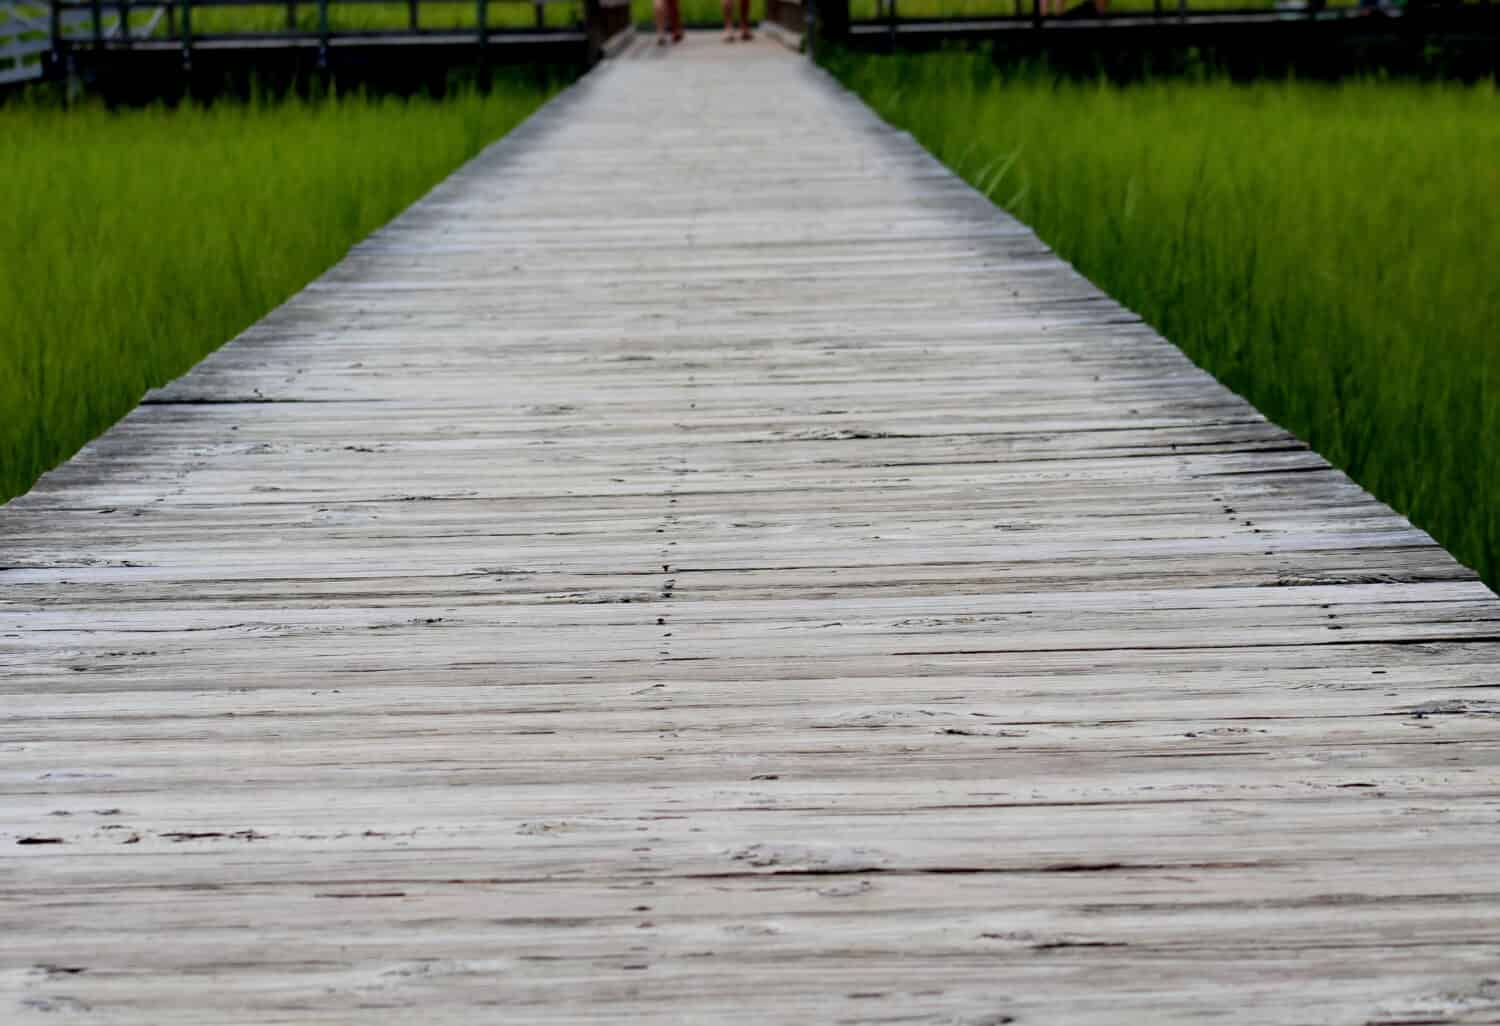 Boardwalk at James Island County Park, SC